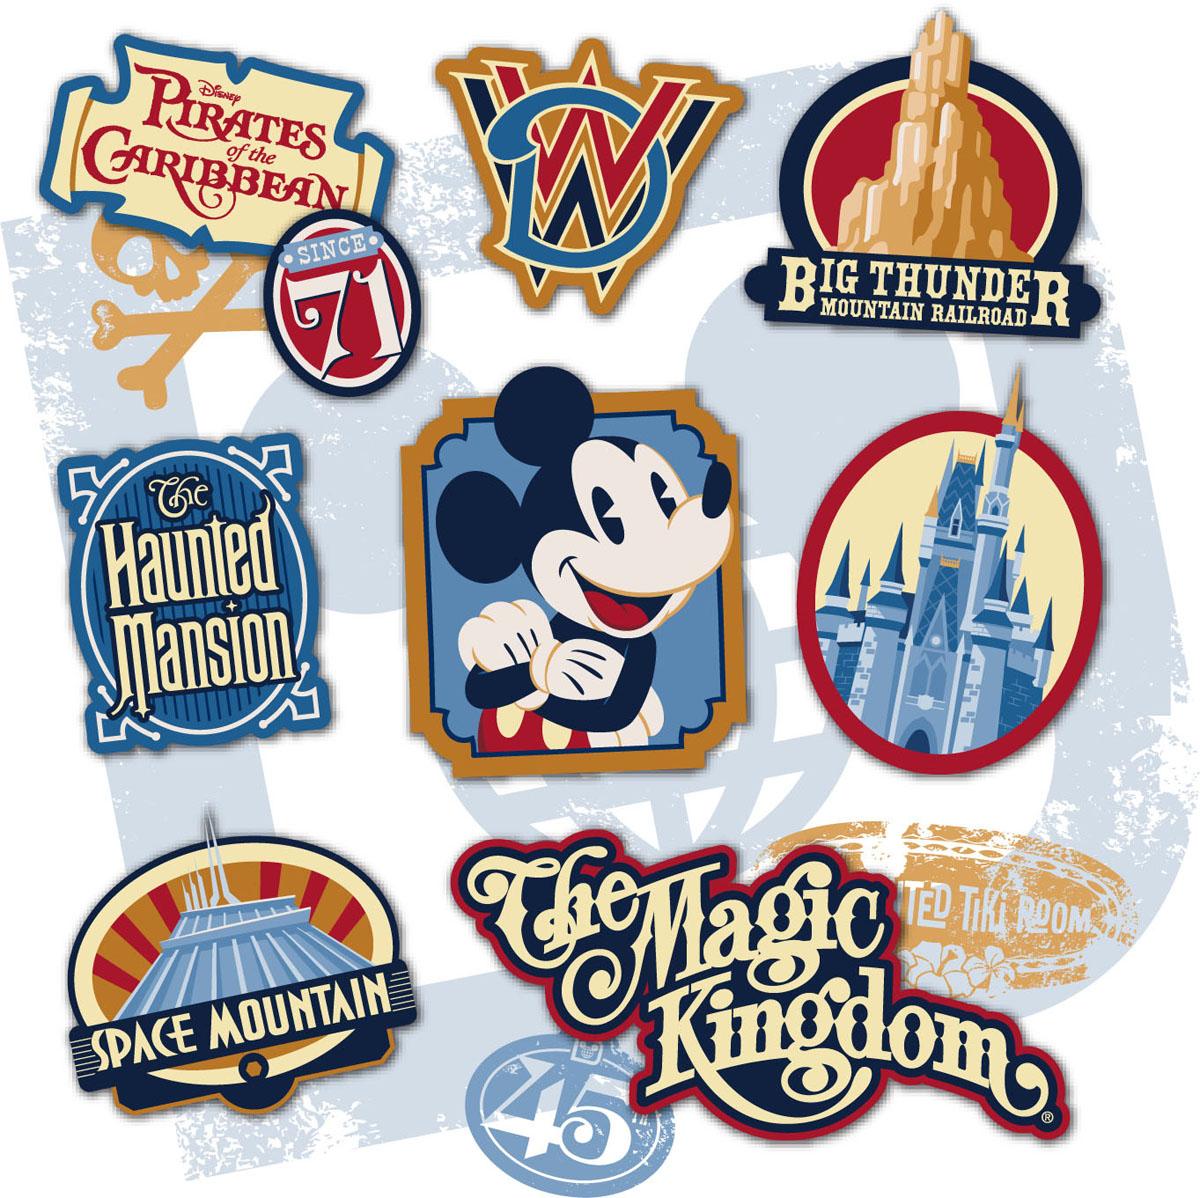 Magic Kingdom Logo - Magic Kingdom 45th Anniversary Merchandise Artwork Preview